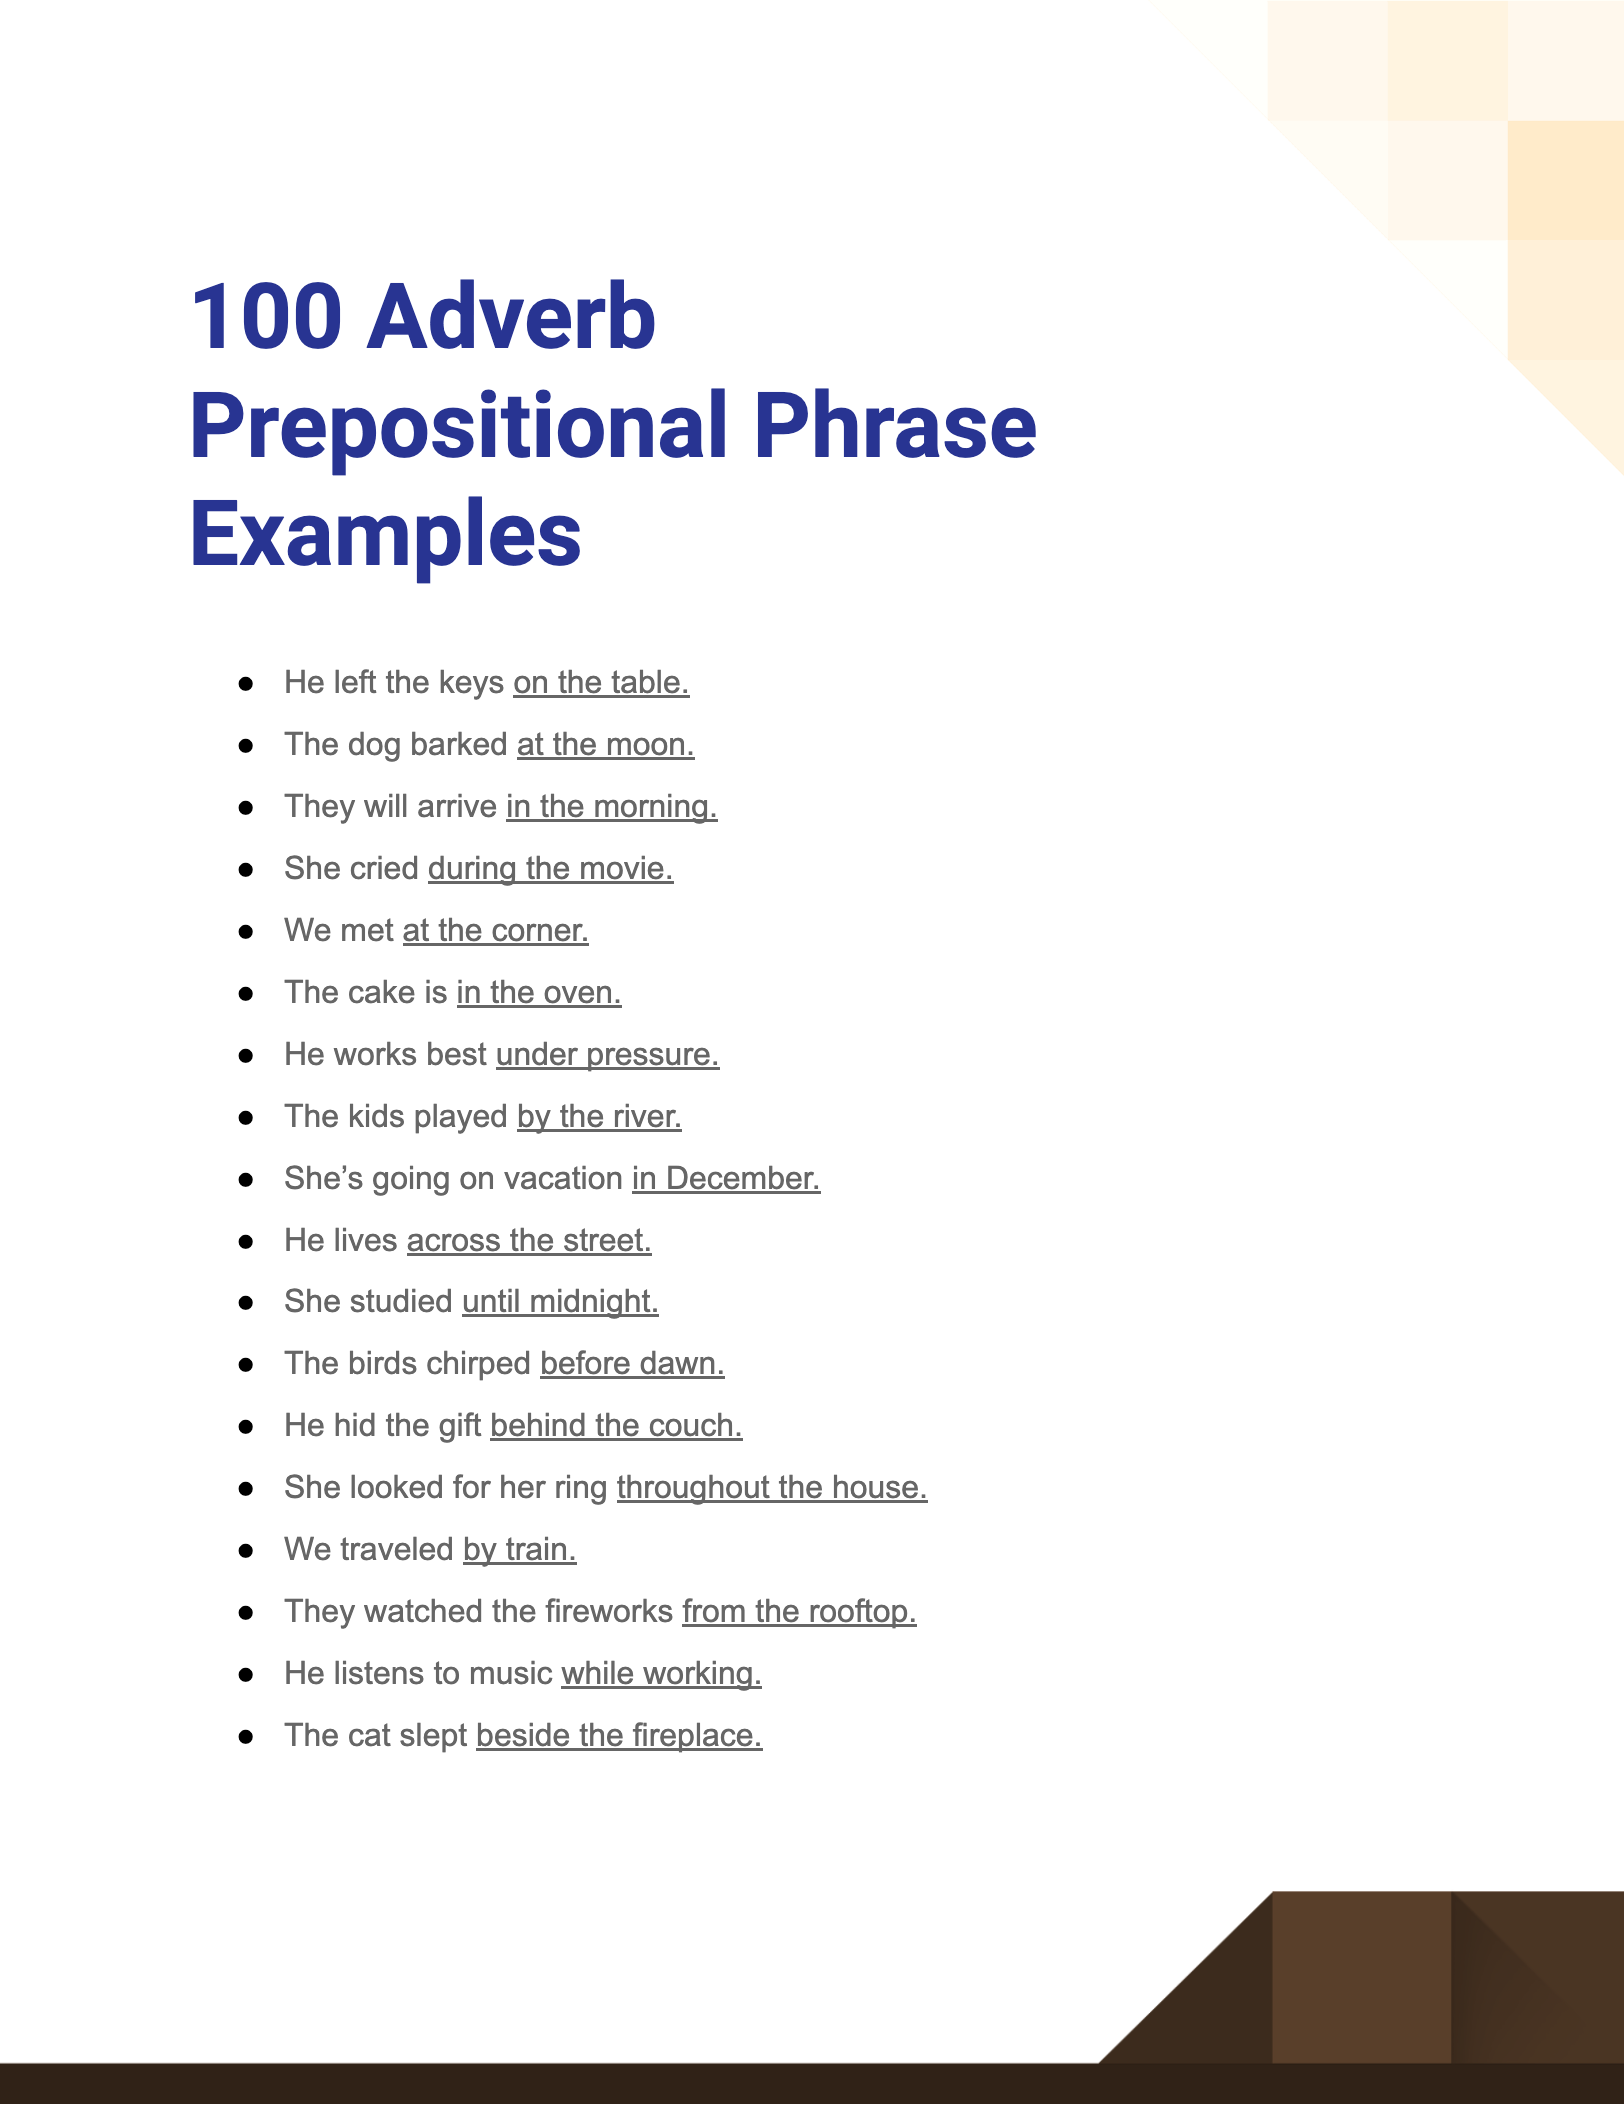 adverb prepositional phrase examples1